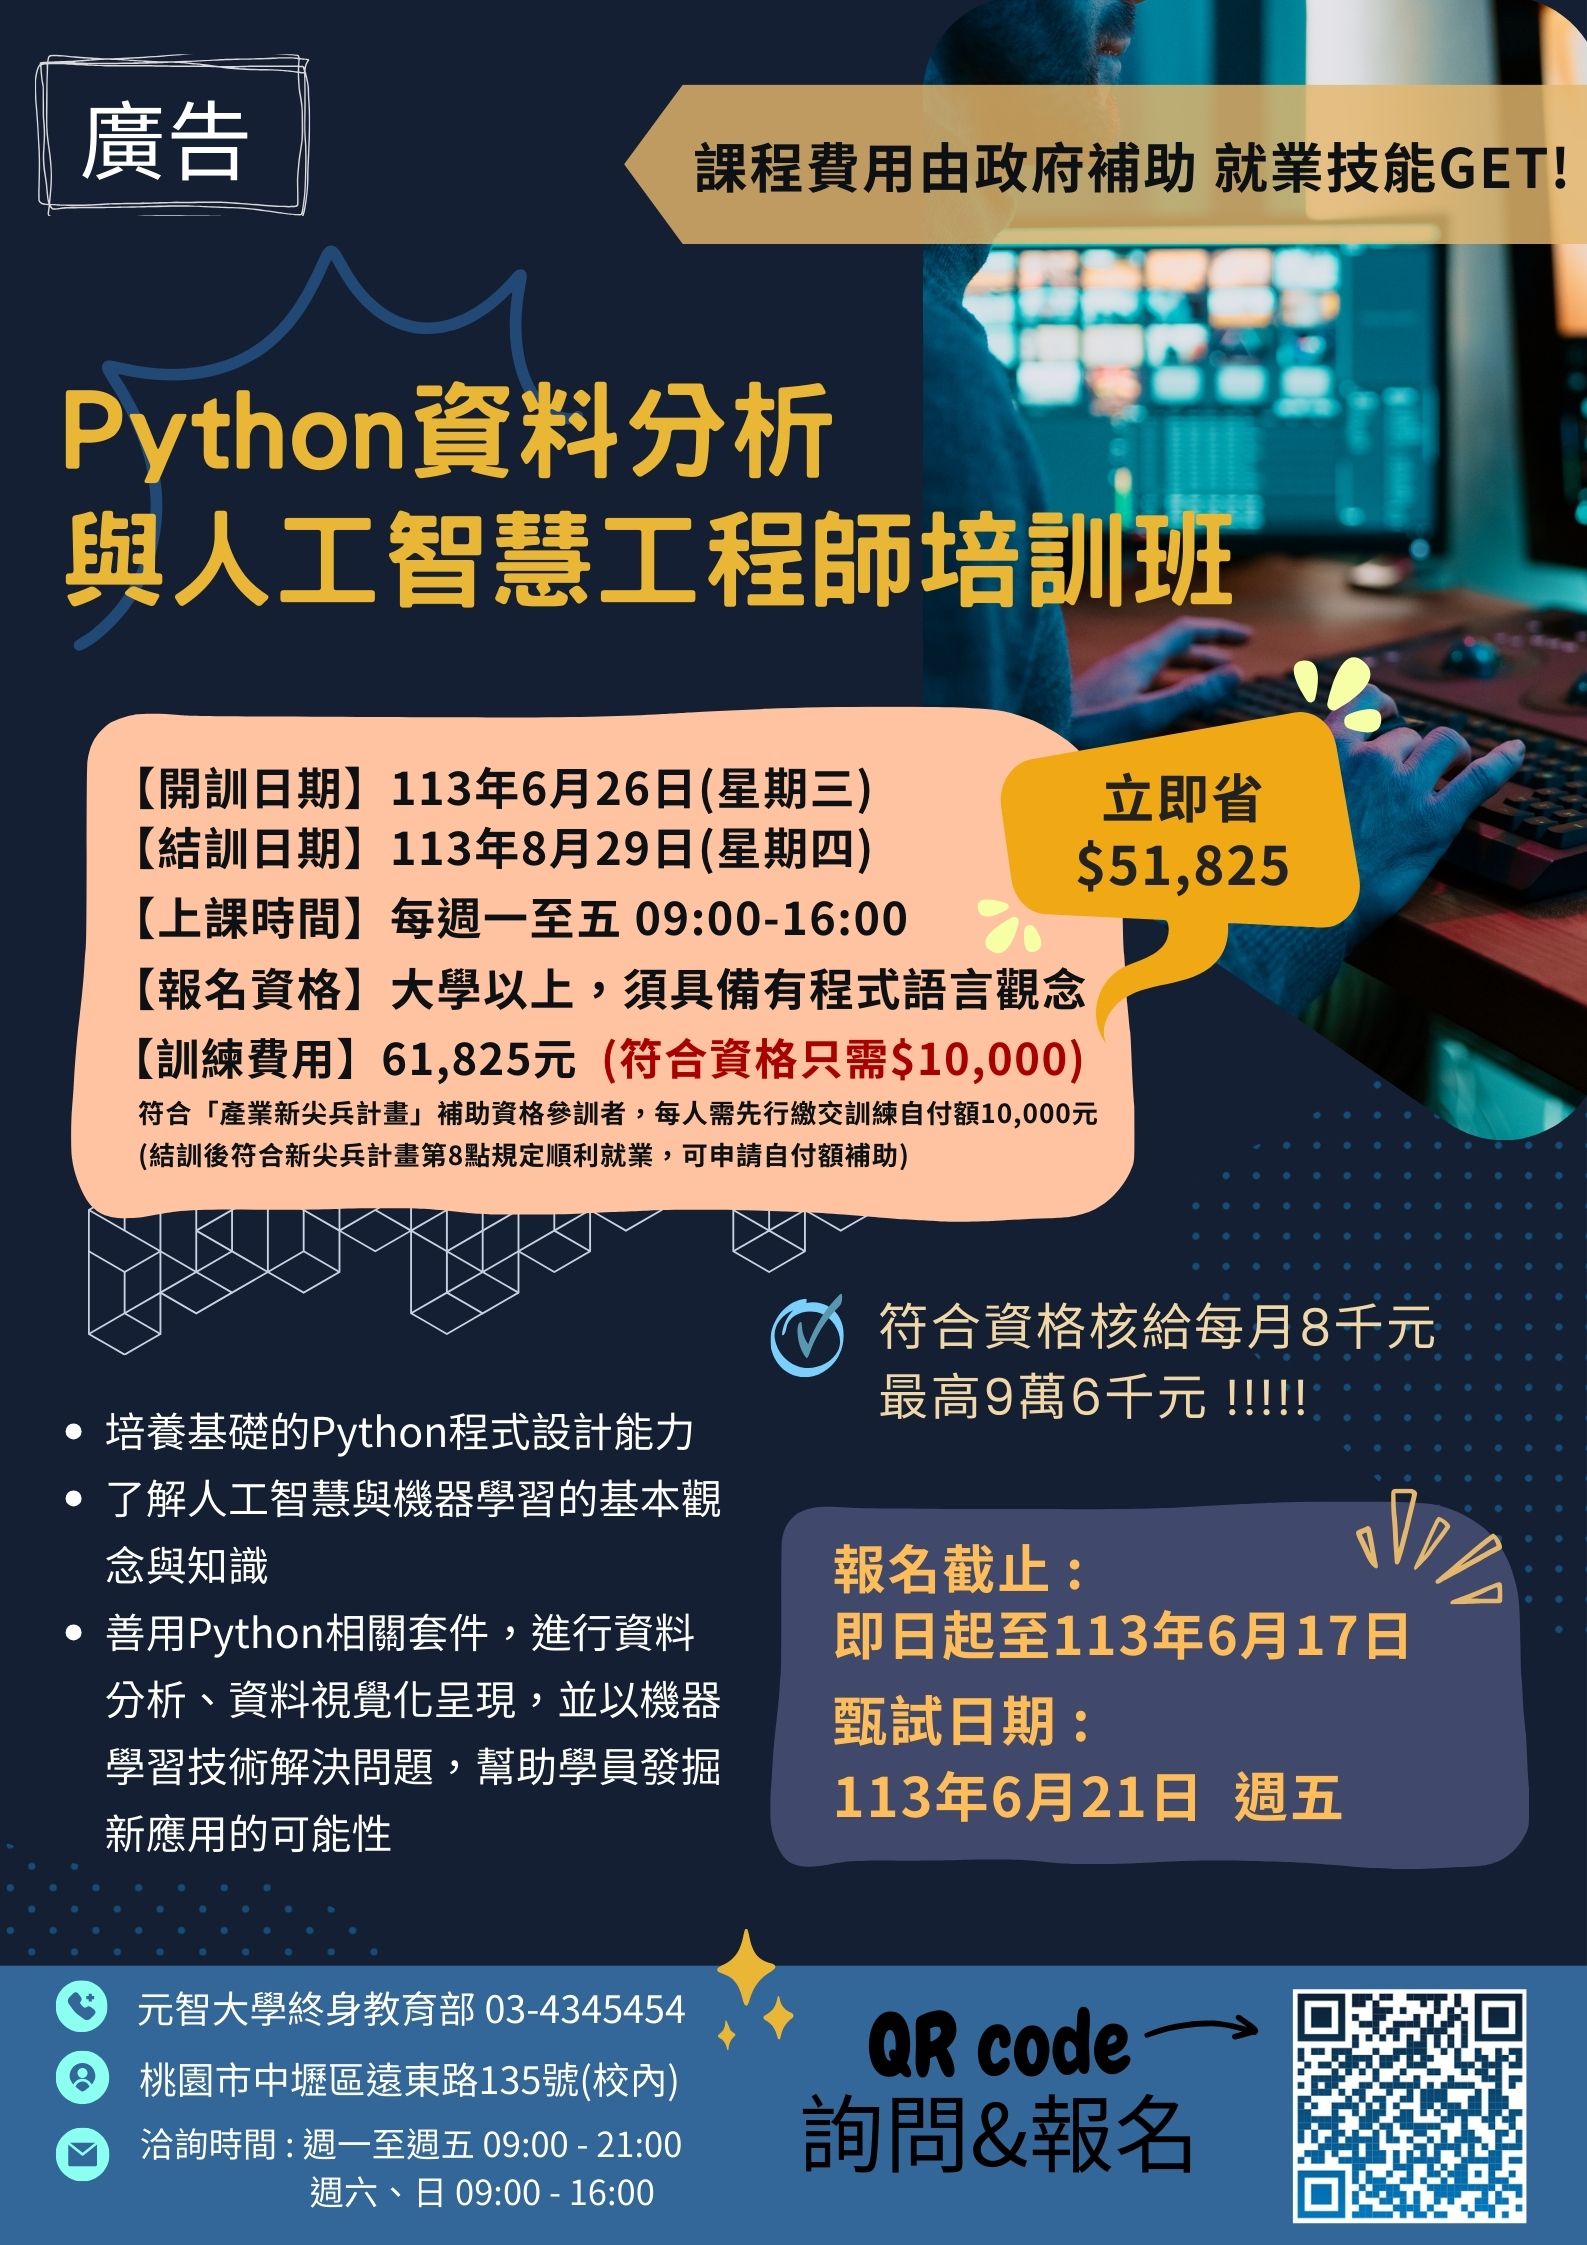 Featured image for “Python資料分析與人工智慧工程師培訓班”